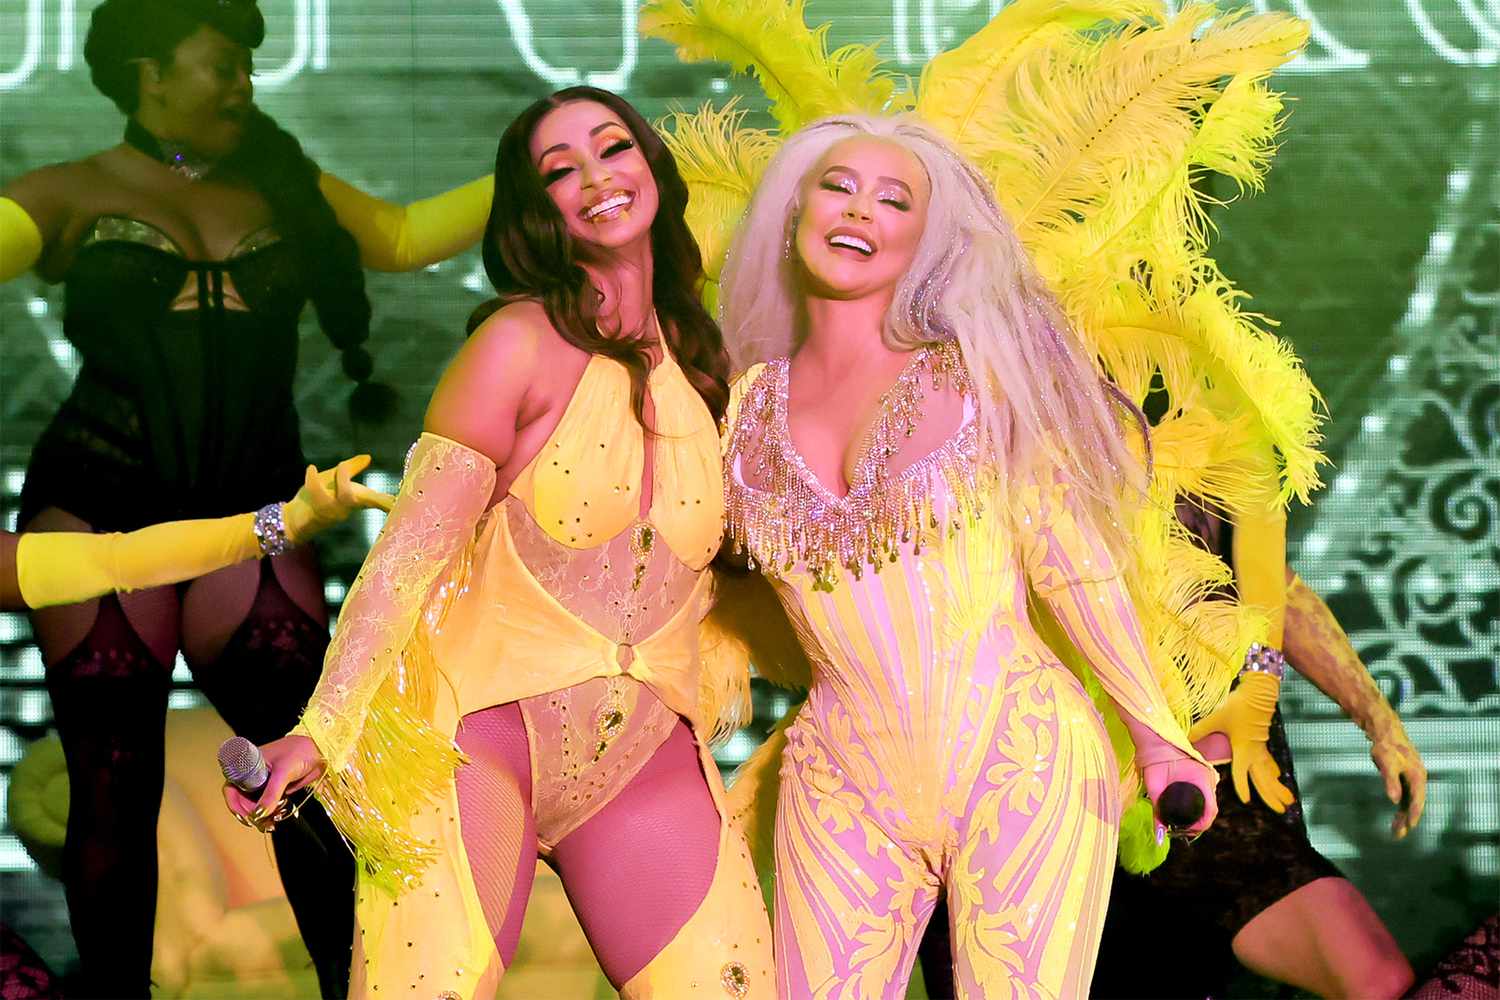 Christina Aguilera and Mya have a 'Lady Marmalade' reunion at L.A. Pride